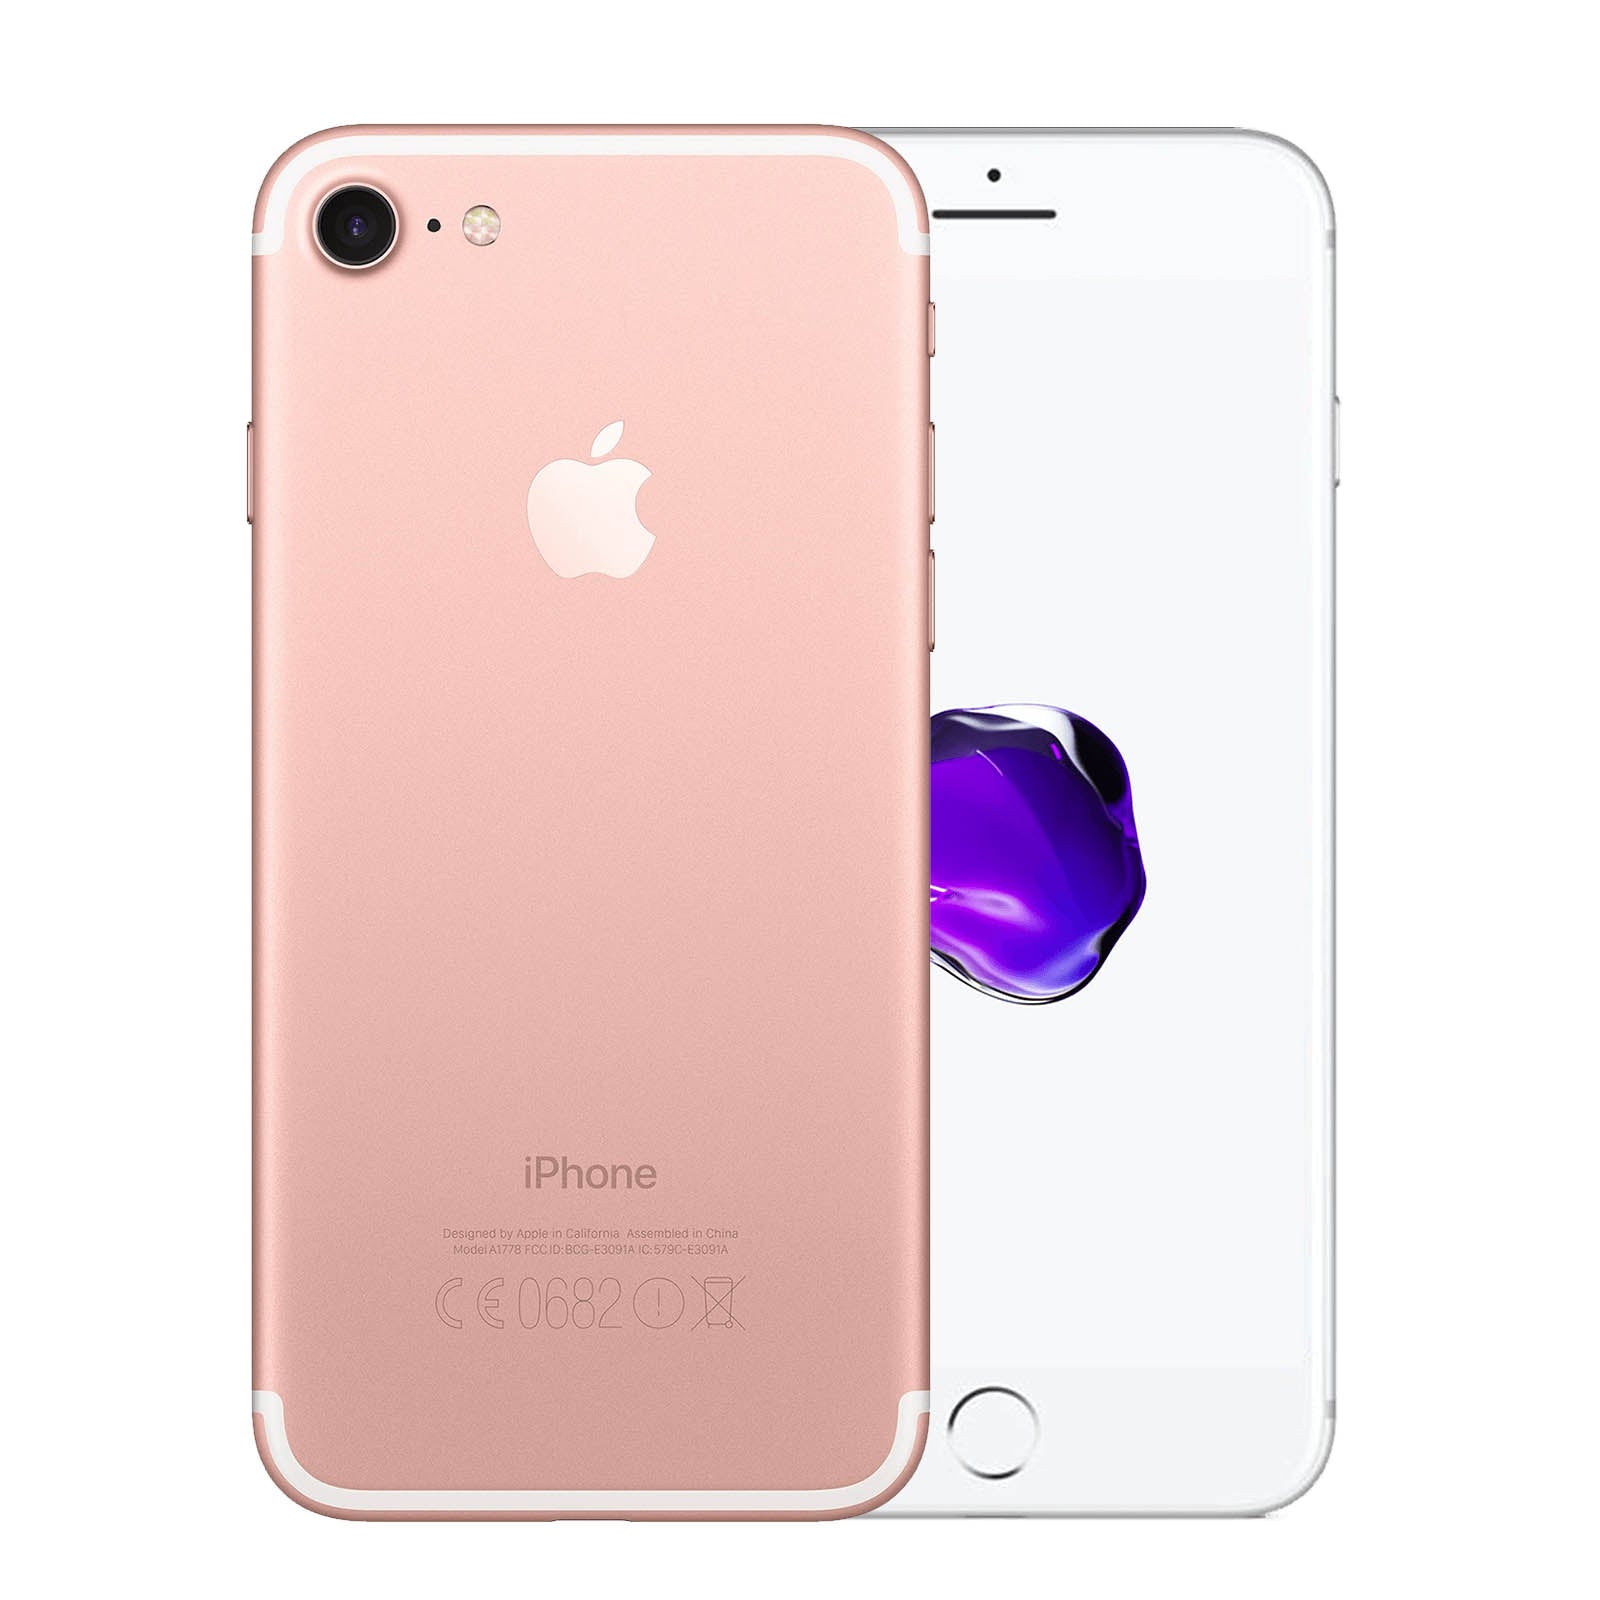 Apple iPhone 7 32GB Rose Gold Very Good- Unlocked